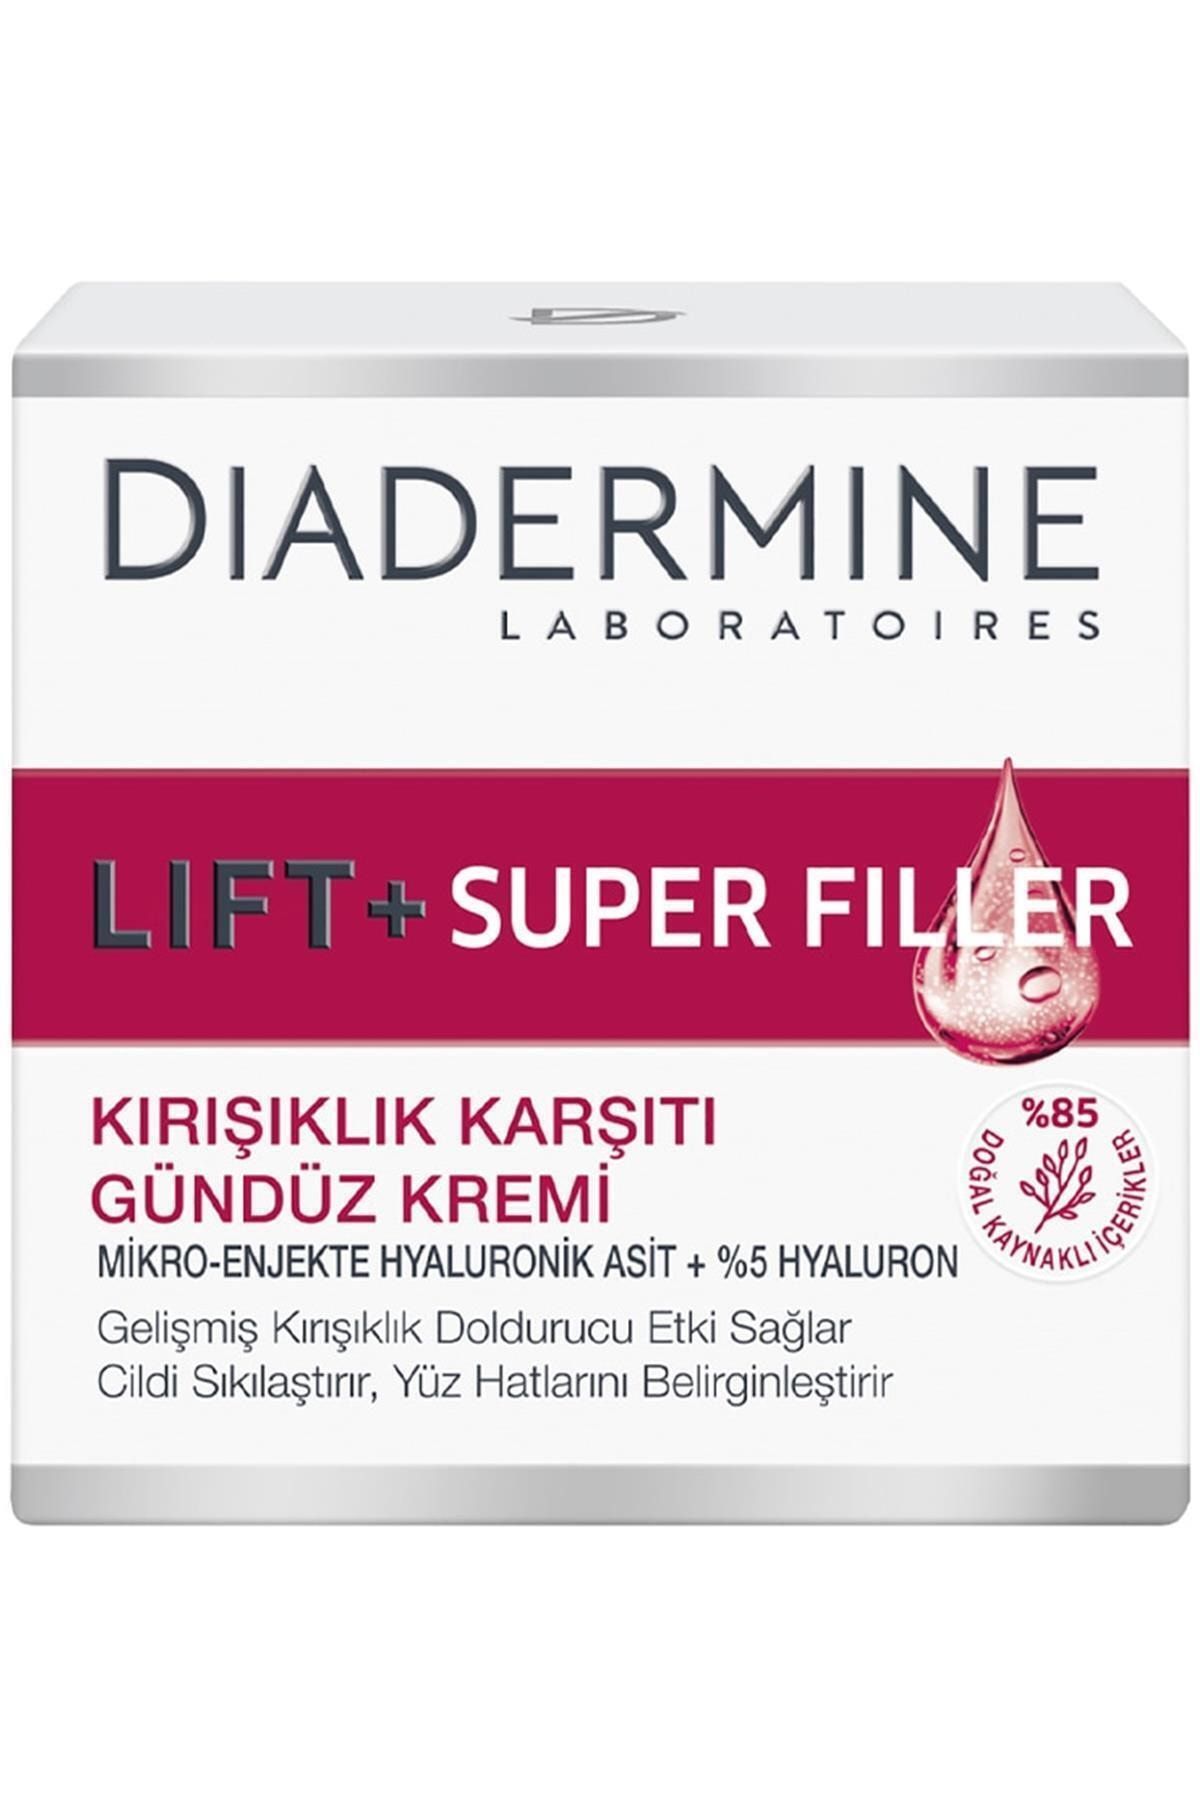 Diadermine Marka: Lift+ Super Filler Gündüz Kremi 50 Ml Kategori: Yüz Kremi